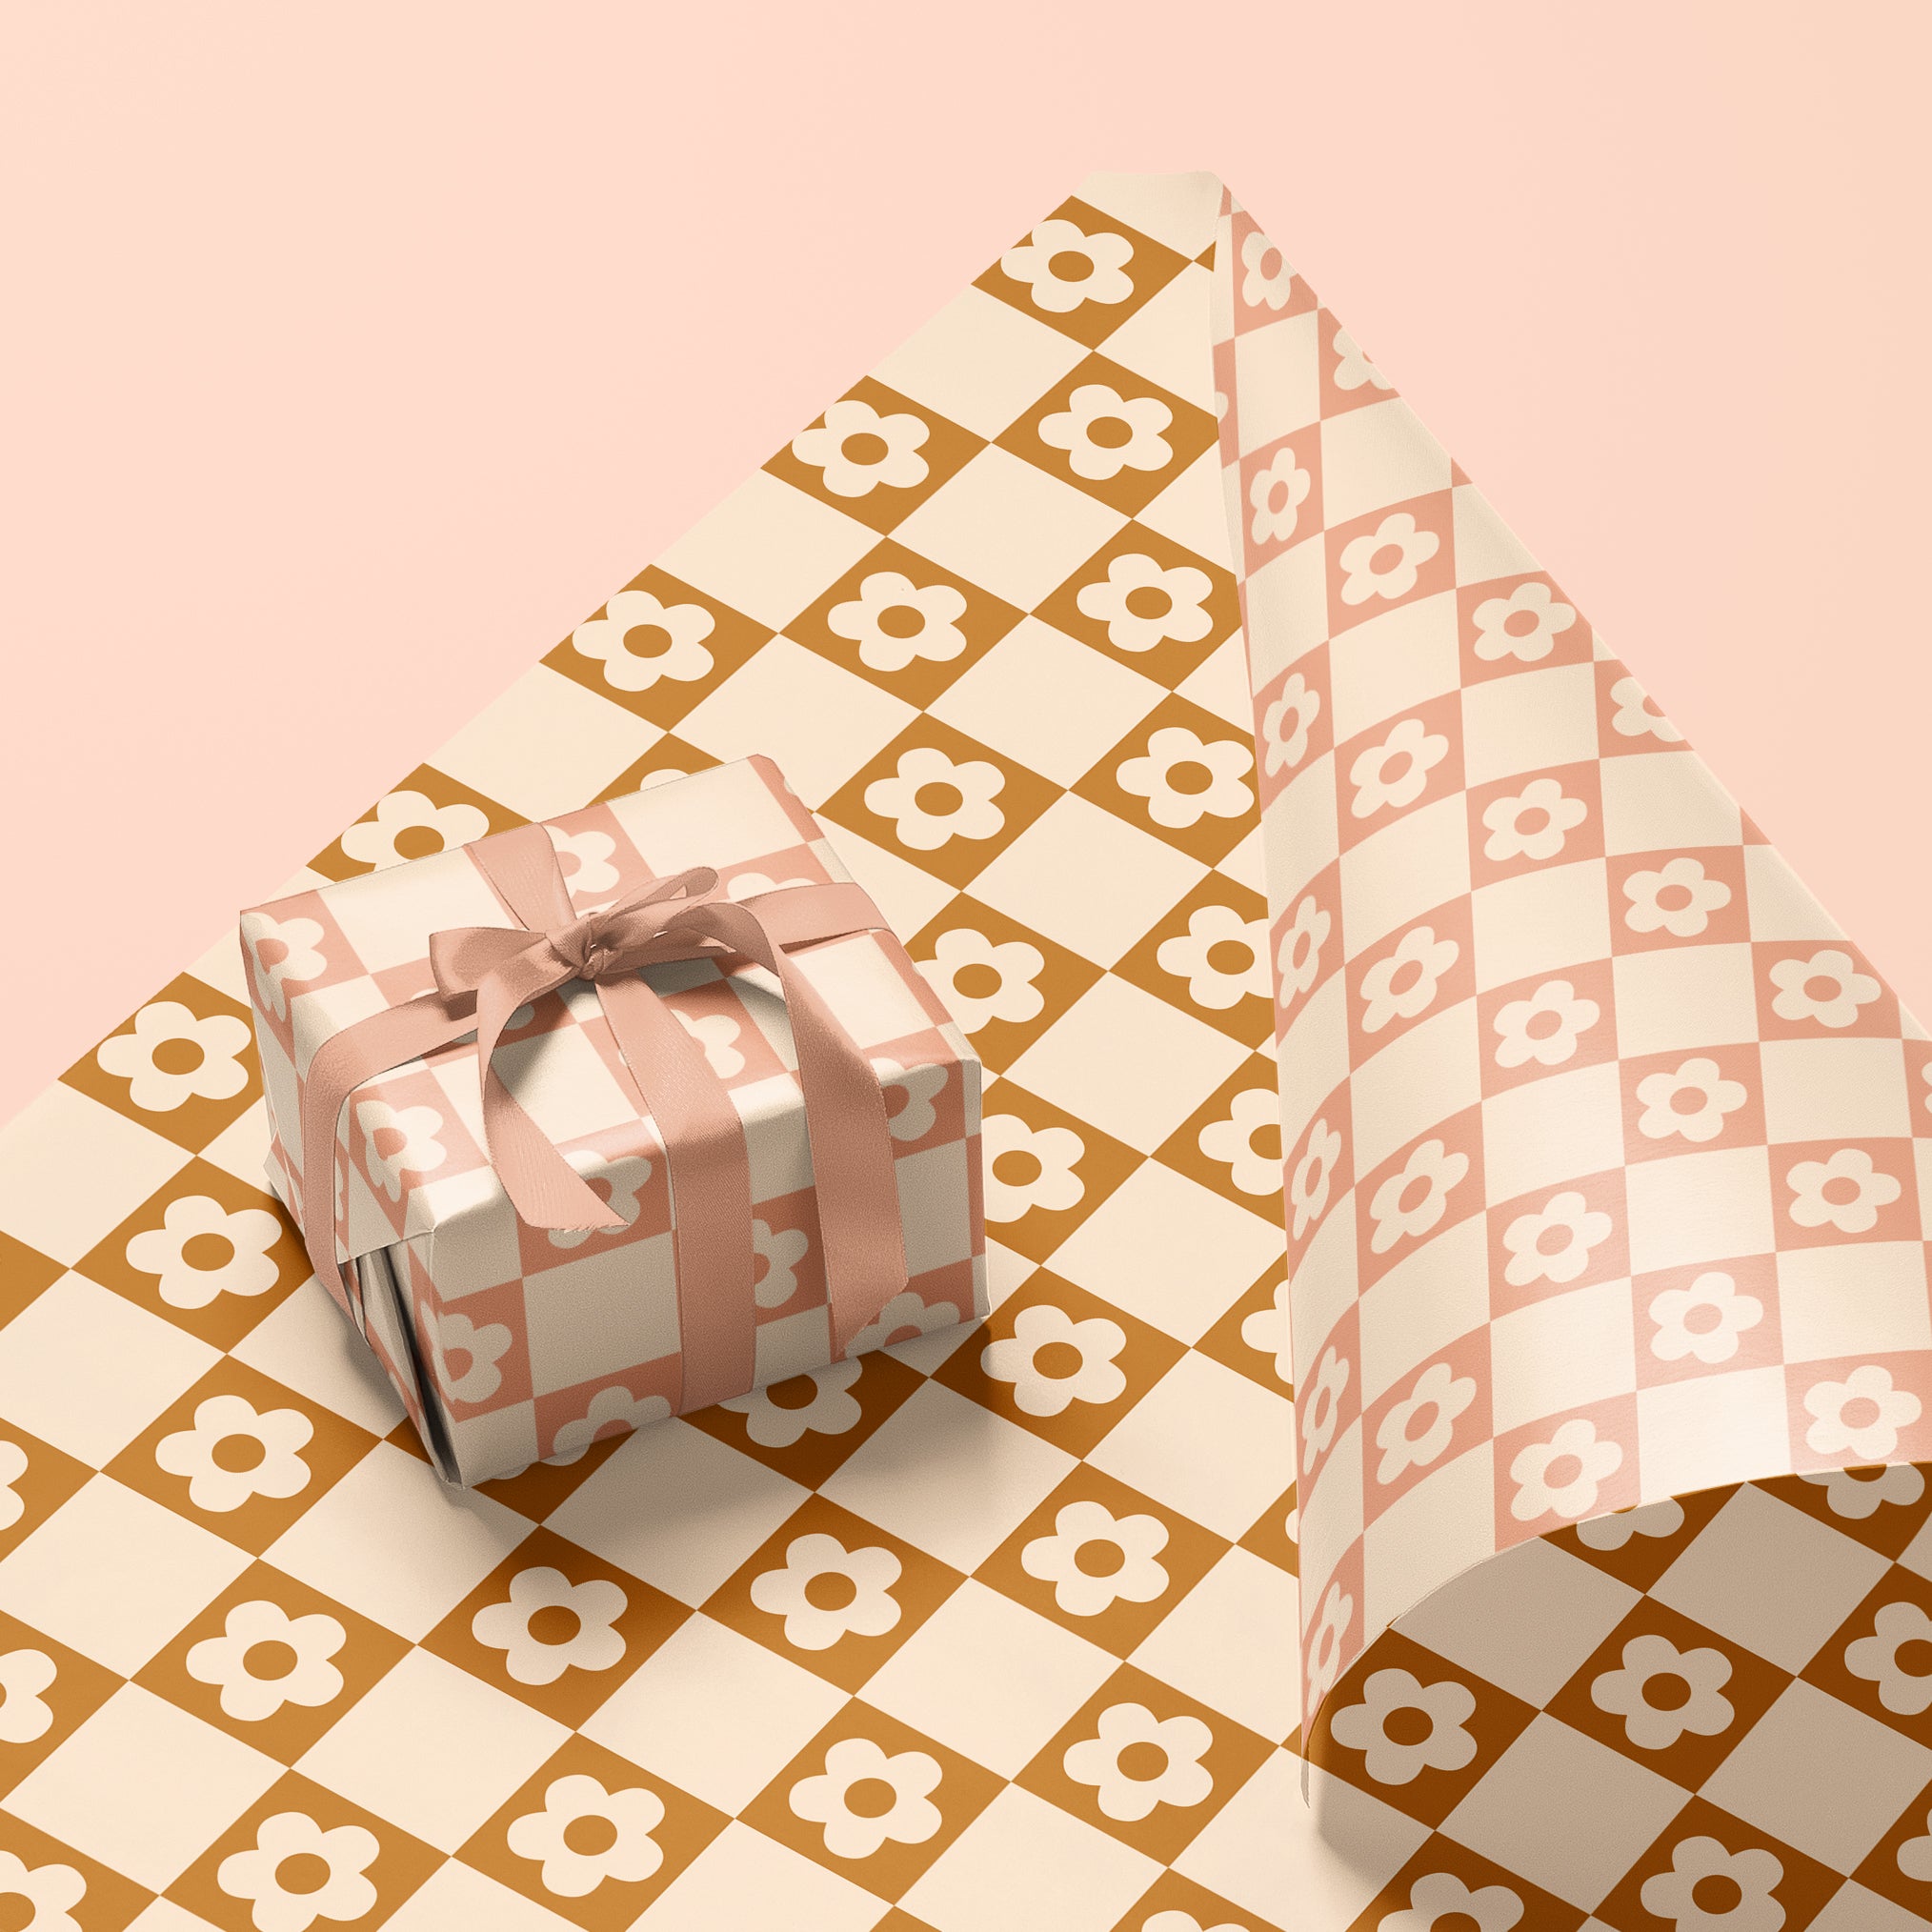 Louis Vuitton wrapping box